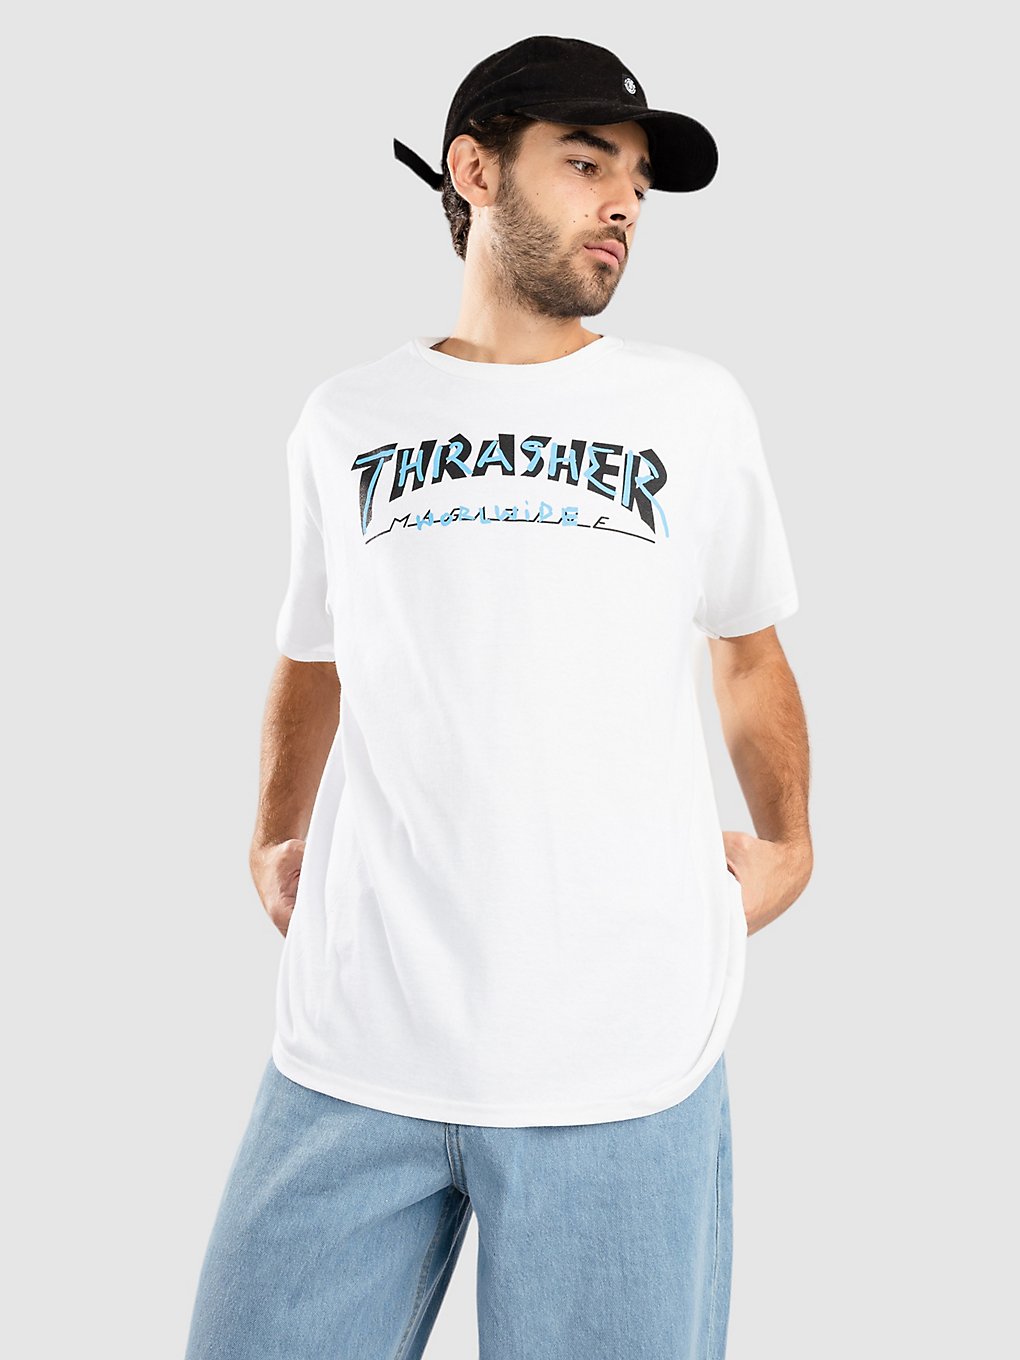 Thrasher Trademark T-Shirt white kaufen